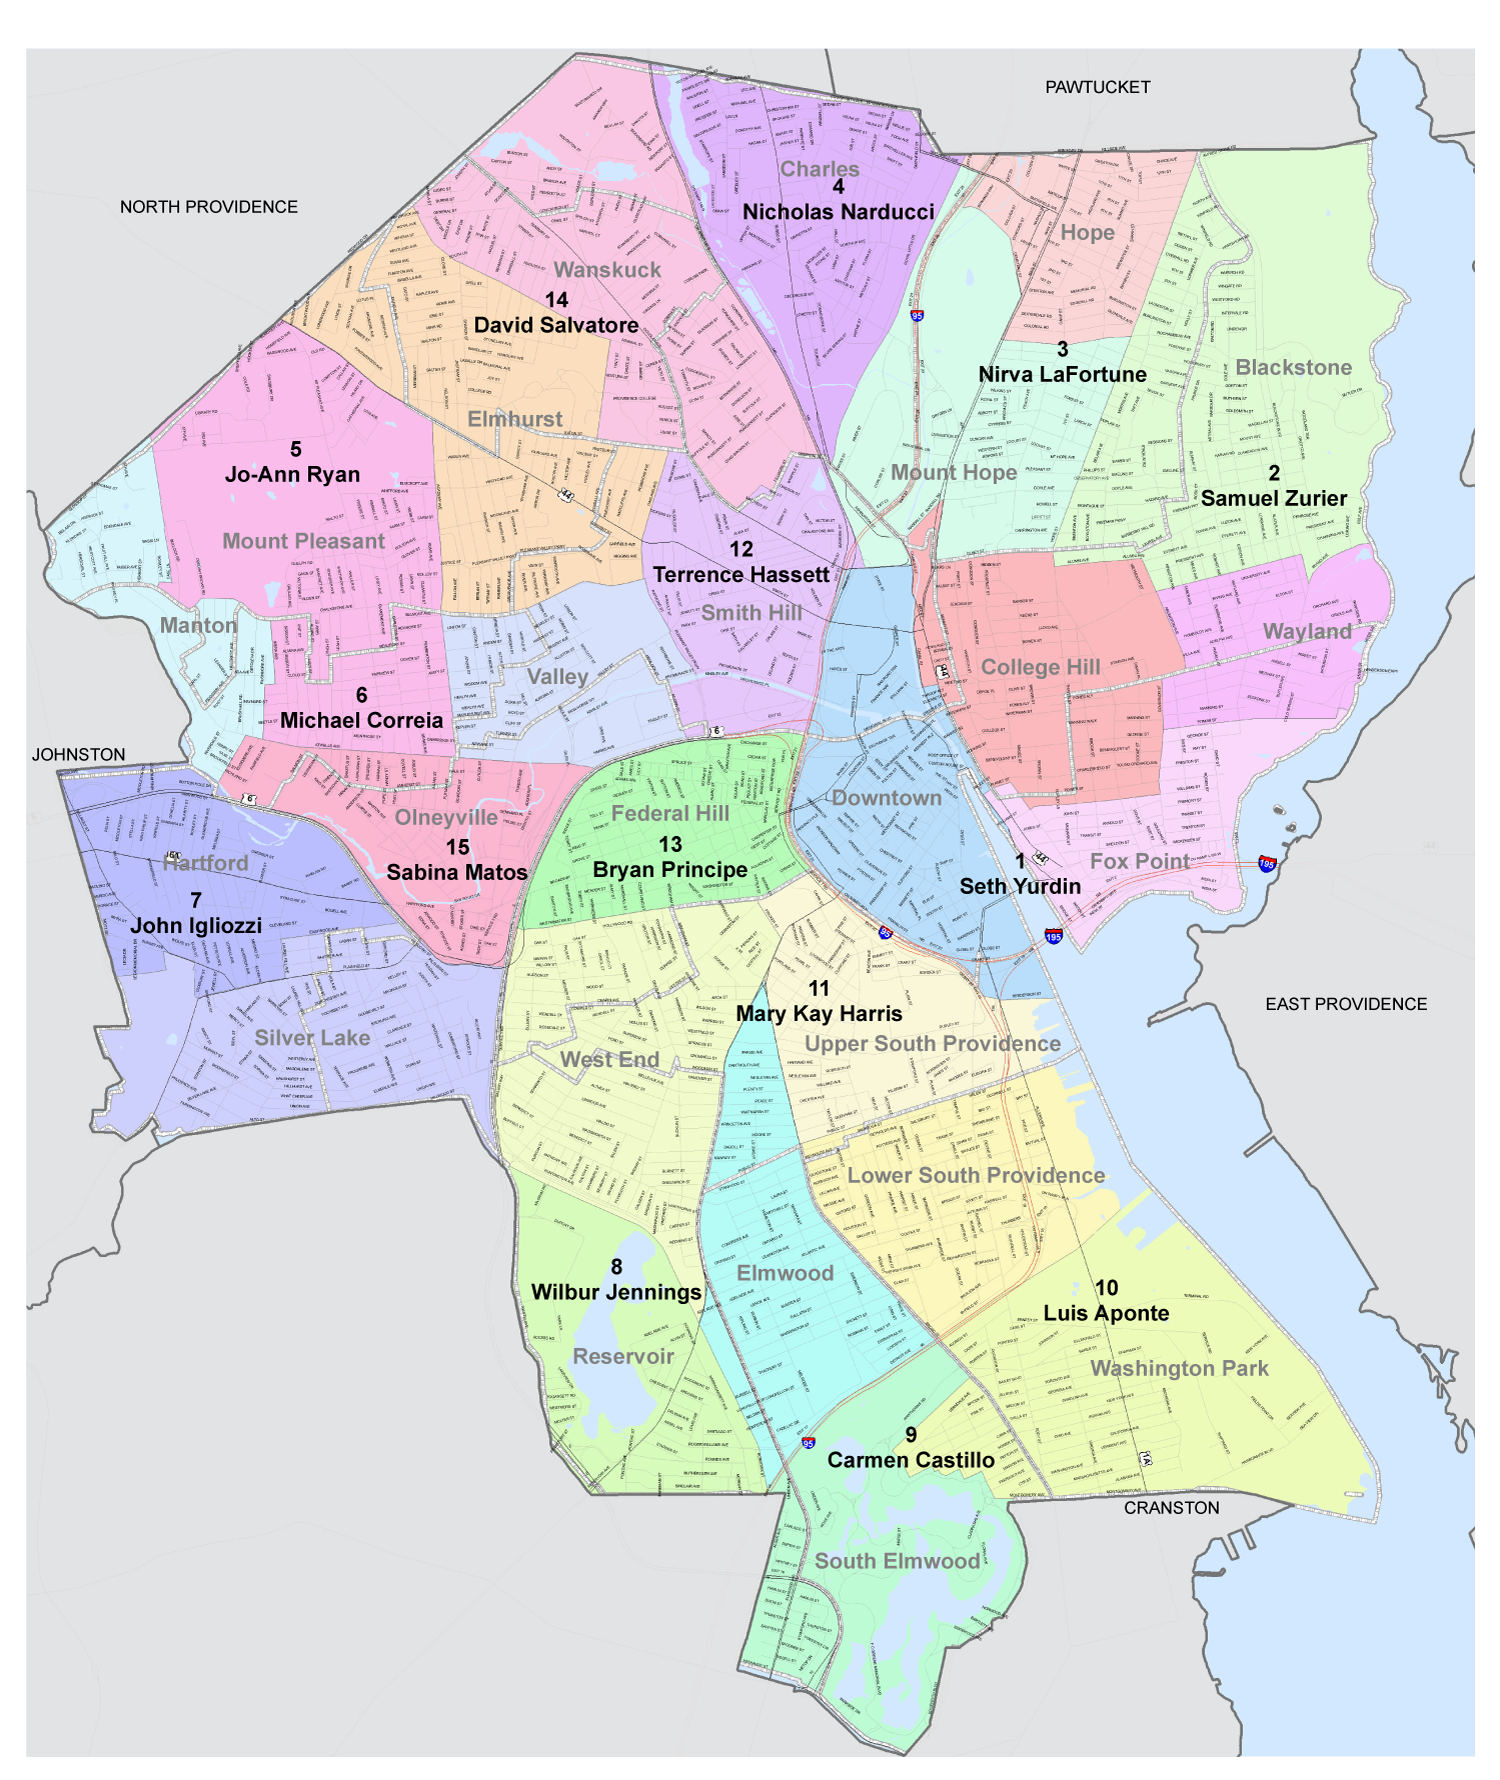 City of Providence Neighborhood&Wards_2017_wRepNamesPortrait - City of